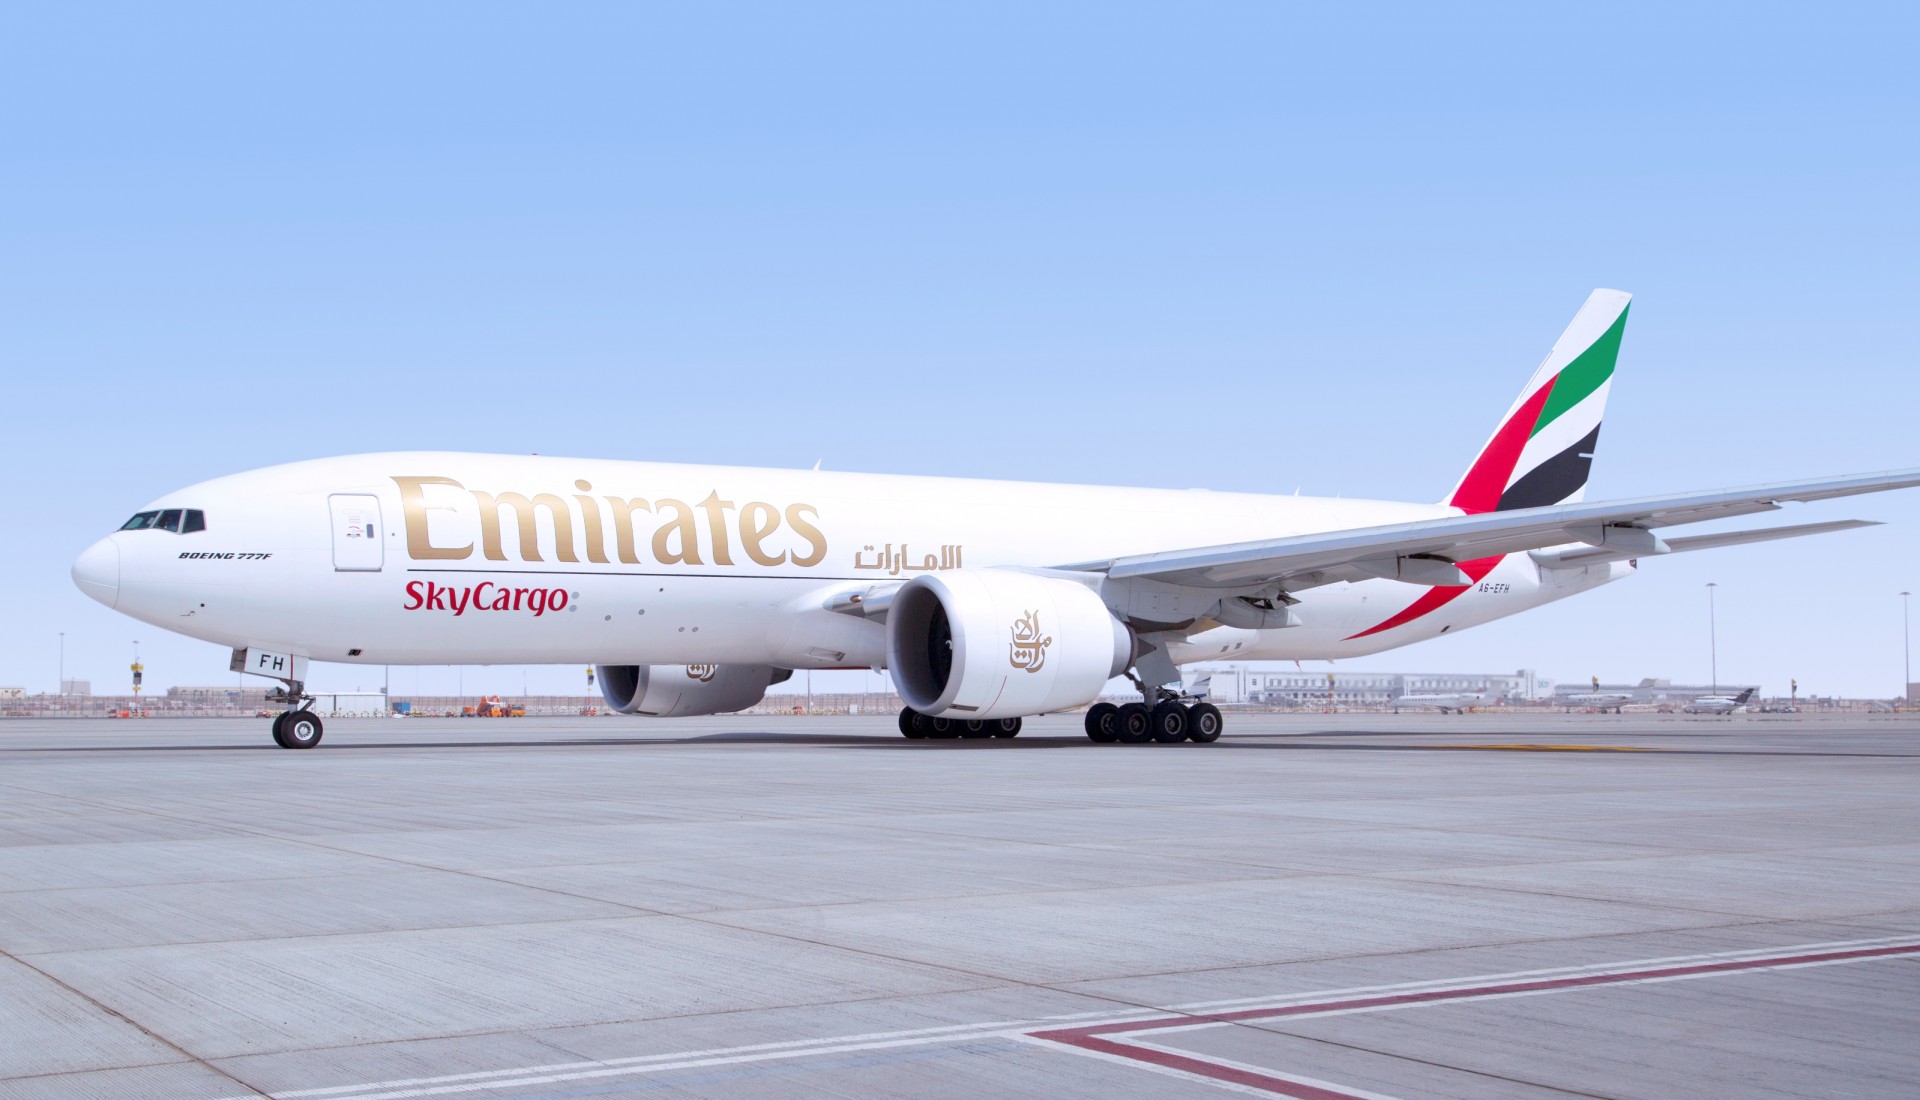 Emirates retains cargo operations, temporarily suspends most passenger flights